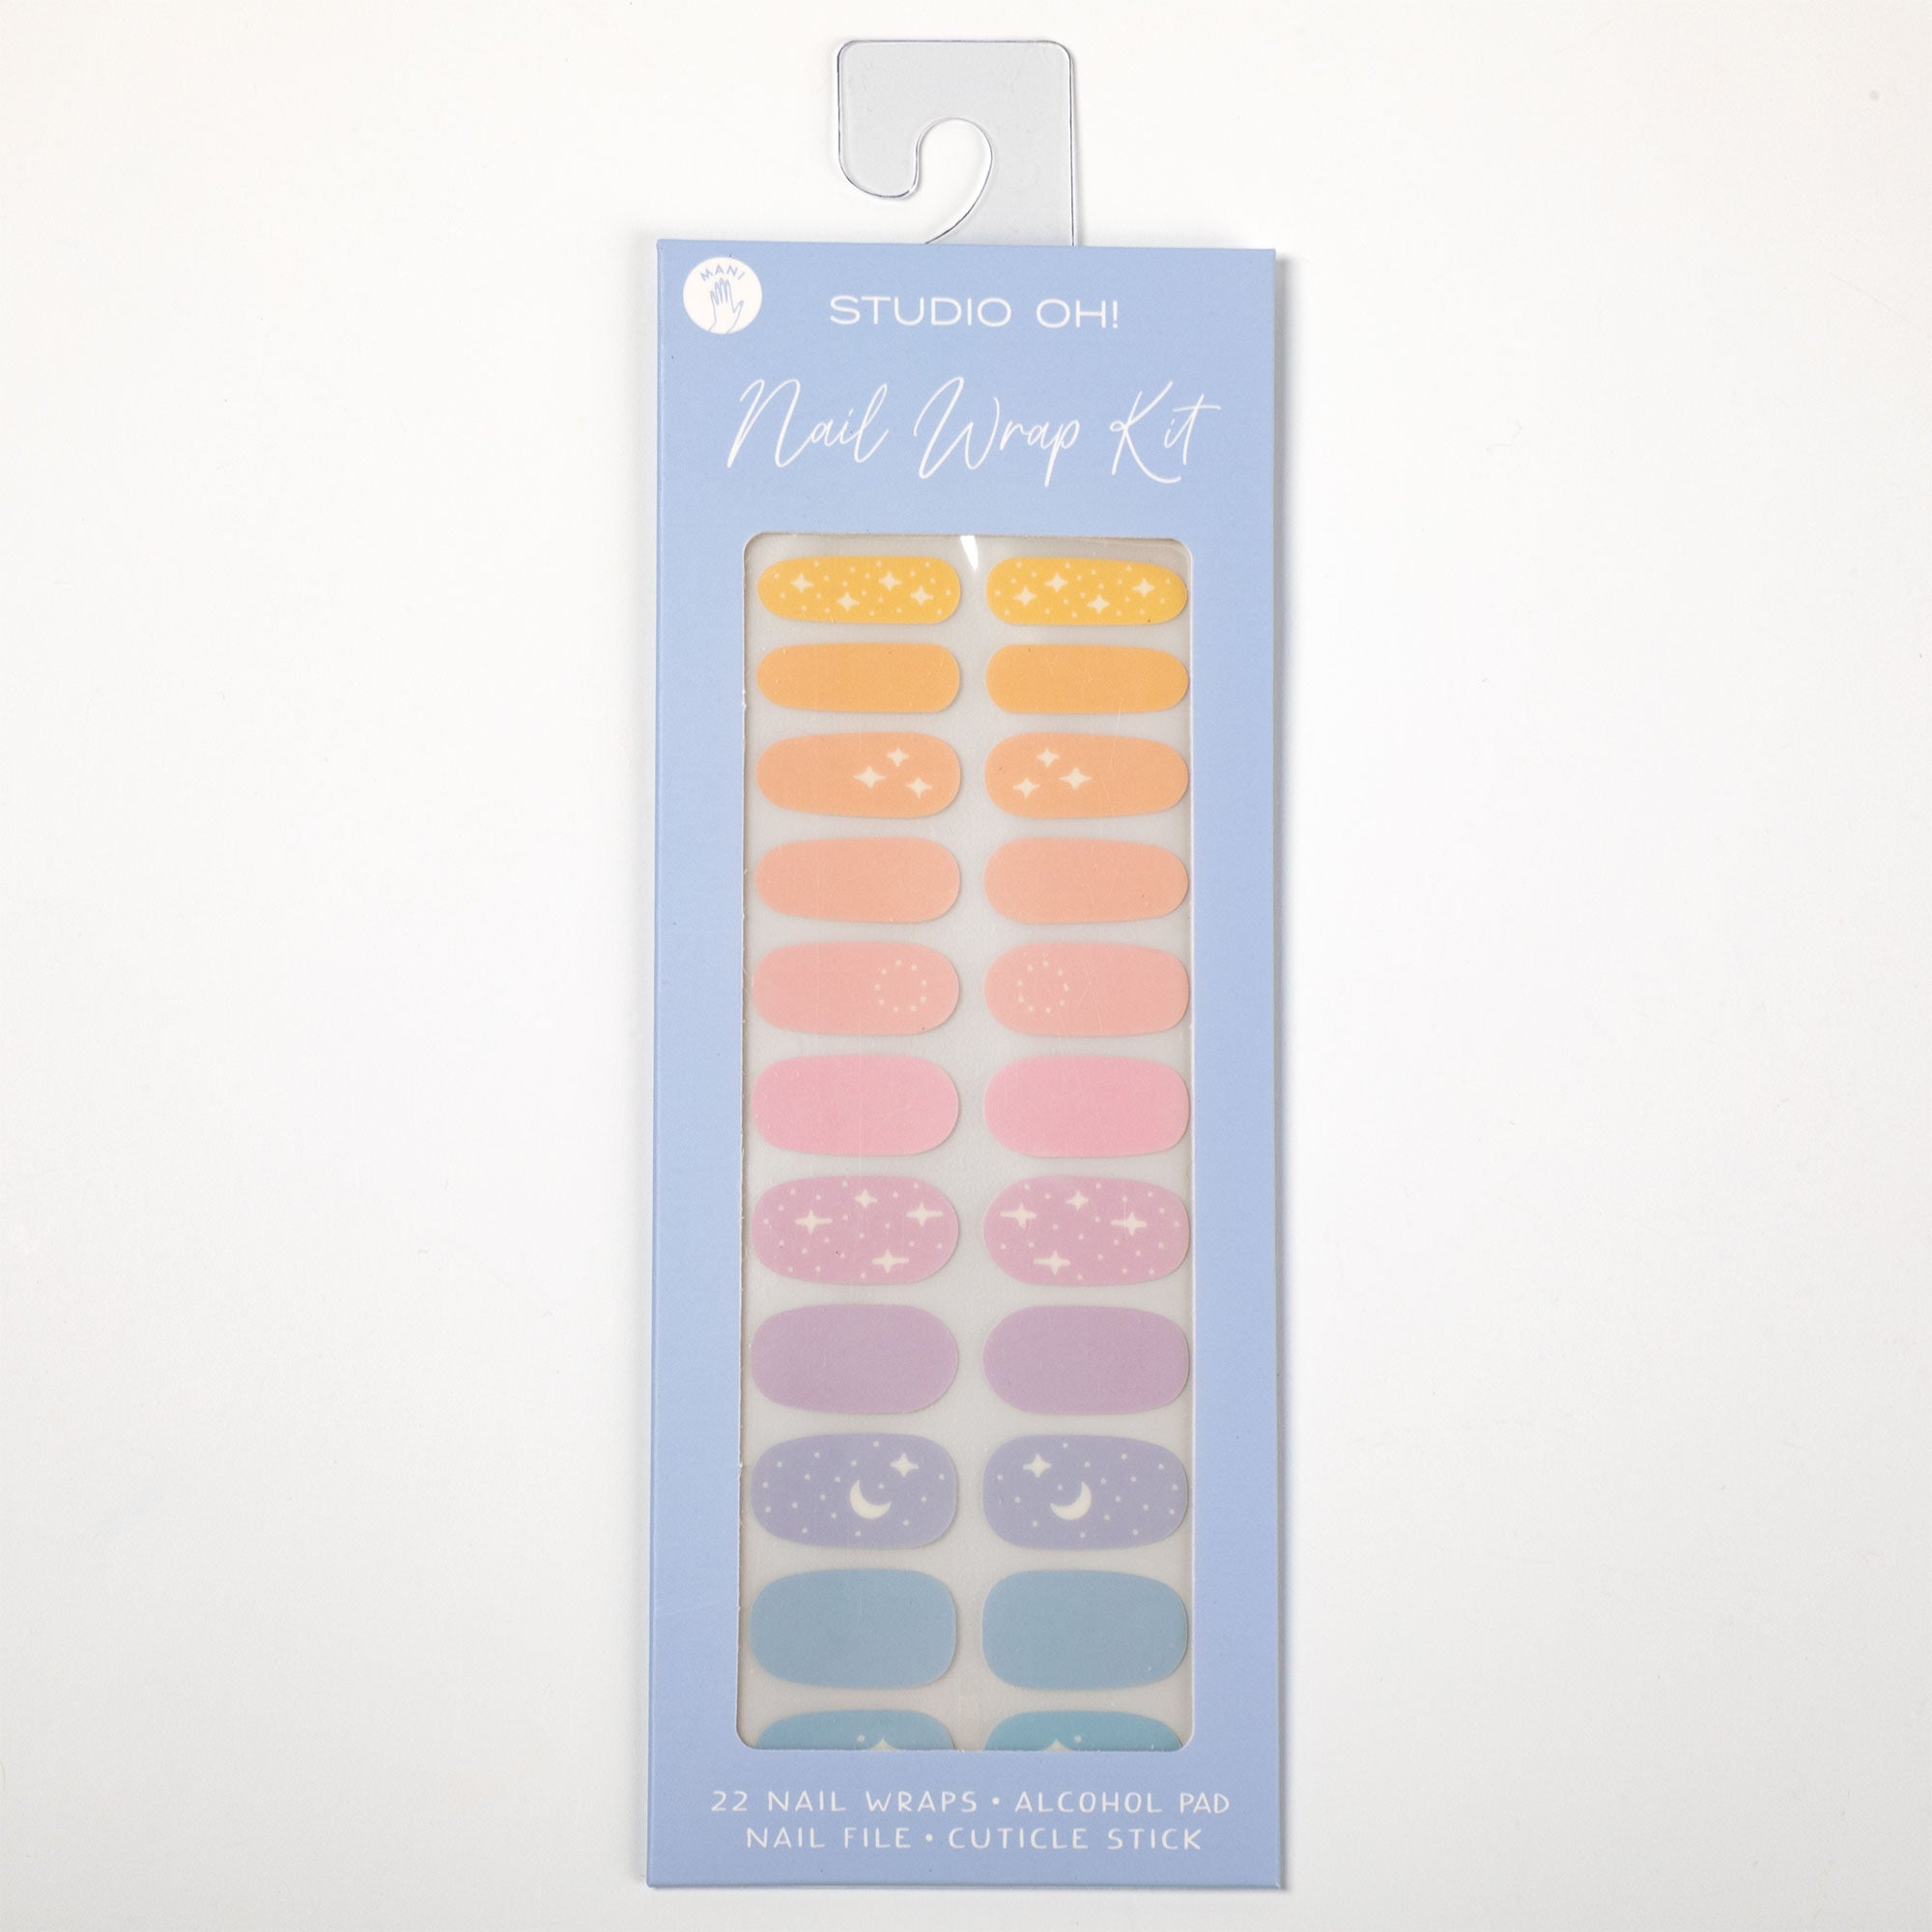 Patterned Manicure Nail Wrap Kit - Pastel Ombre